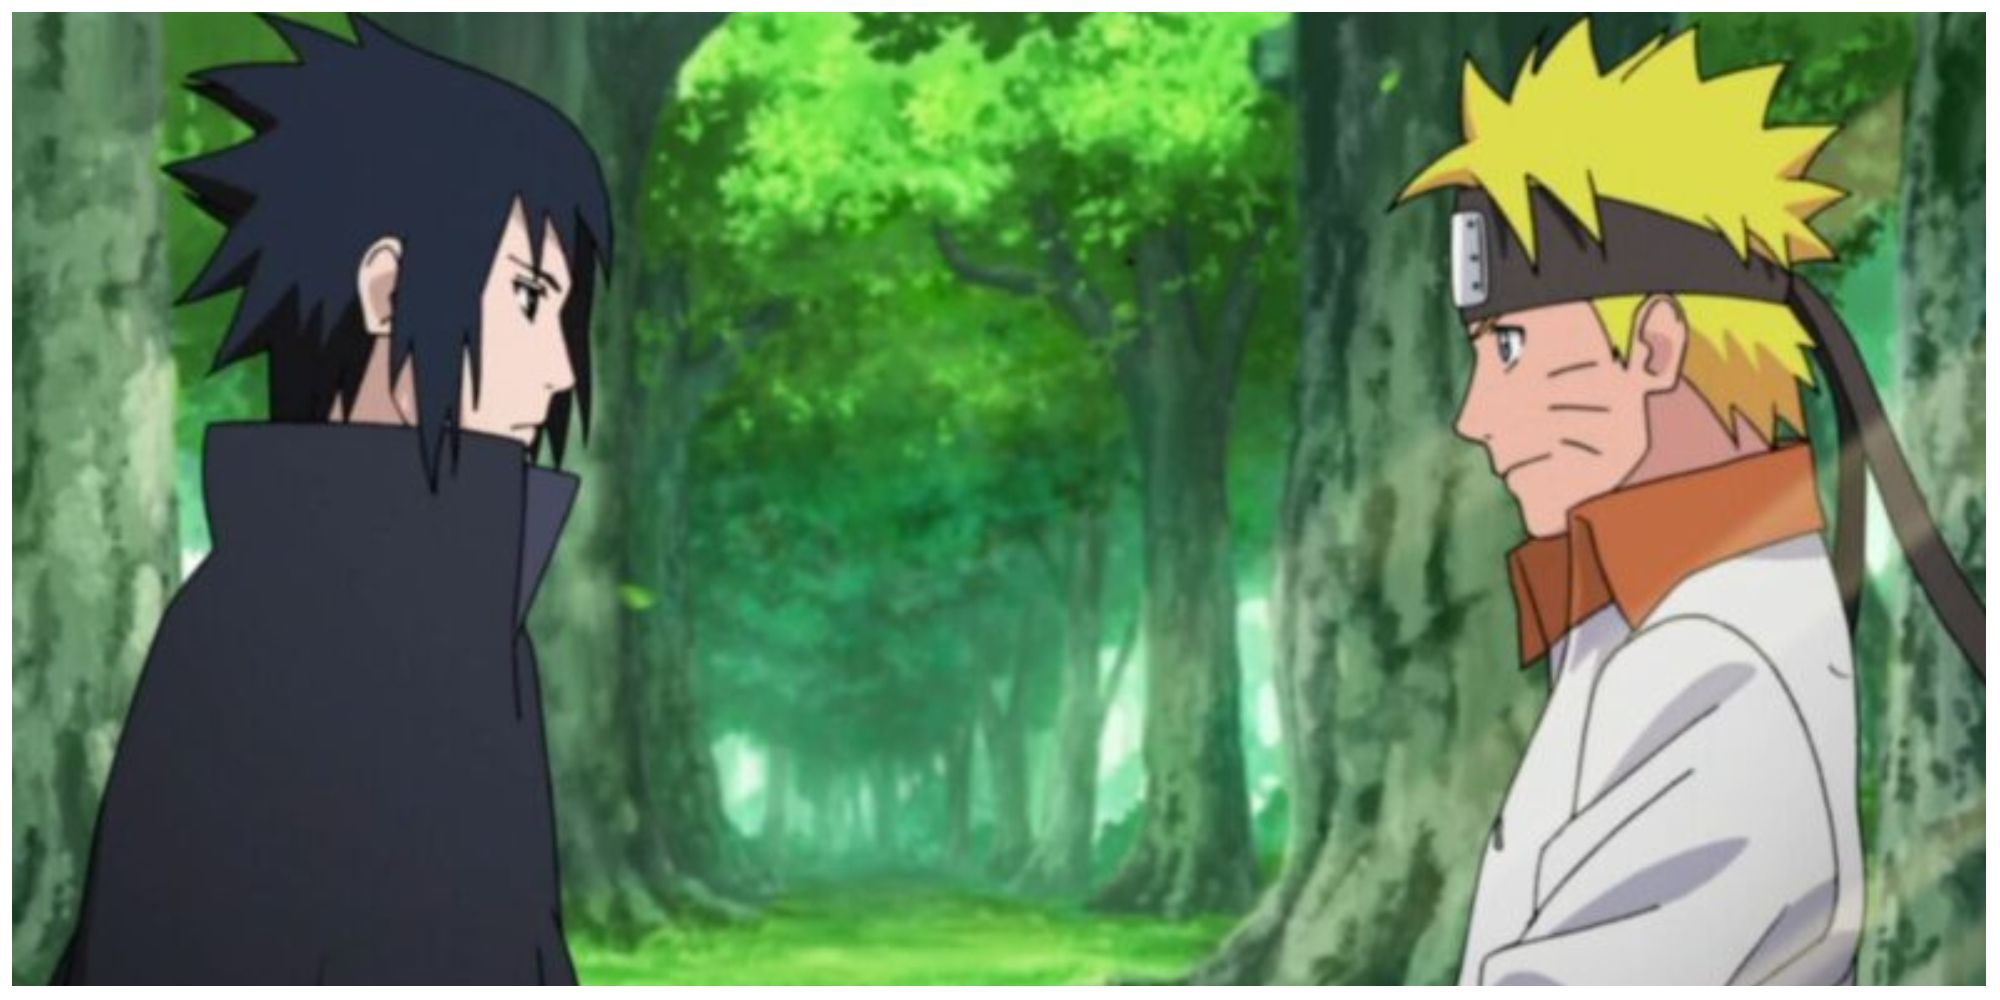 Naruto returns Sasuke's headband